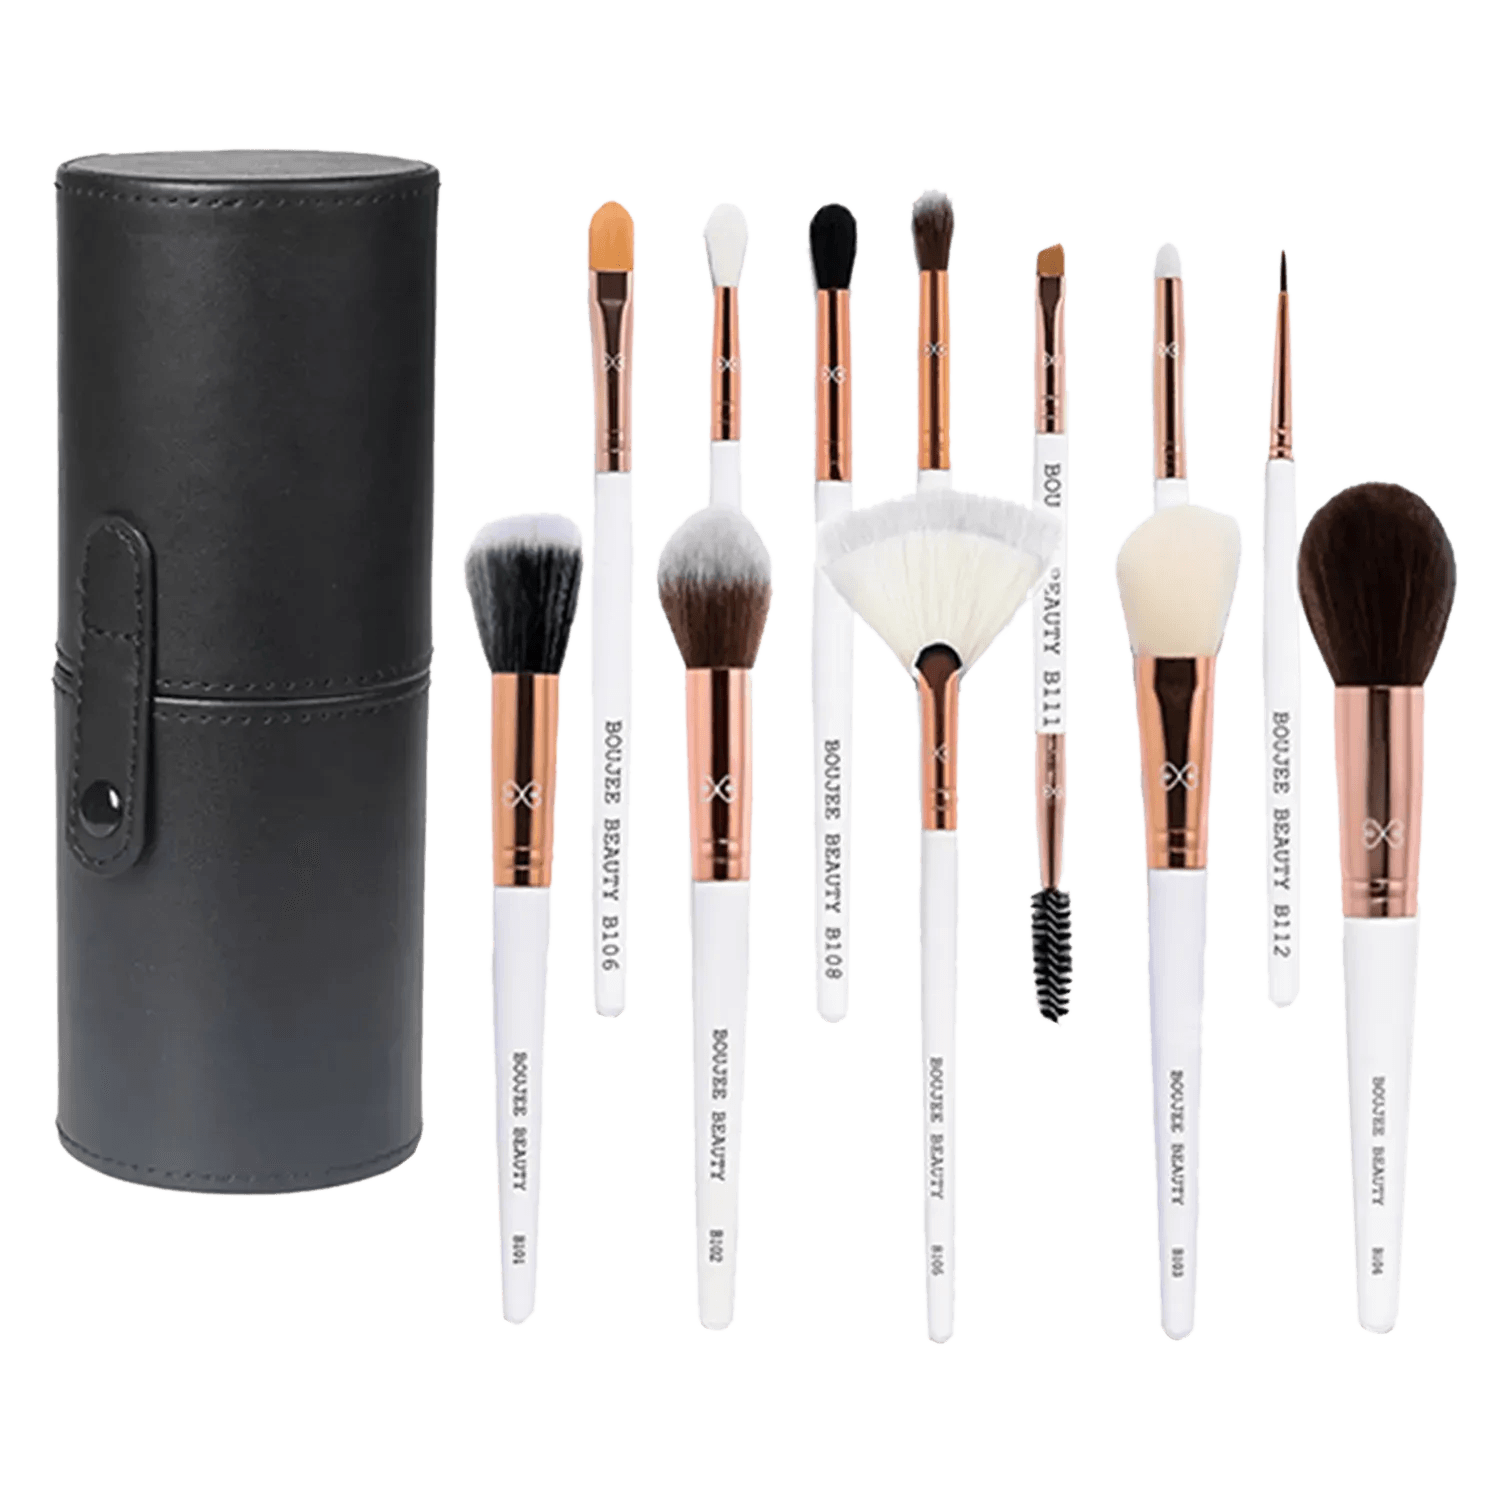 Boujee Beauty | Boujee Beauty Professional Brush Set With Travel Case - S104 (12 Pcs)